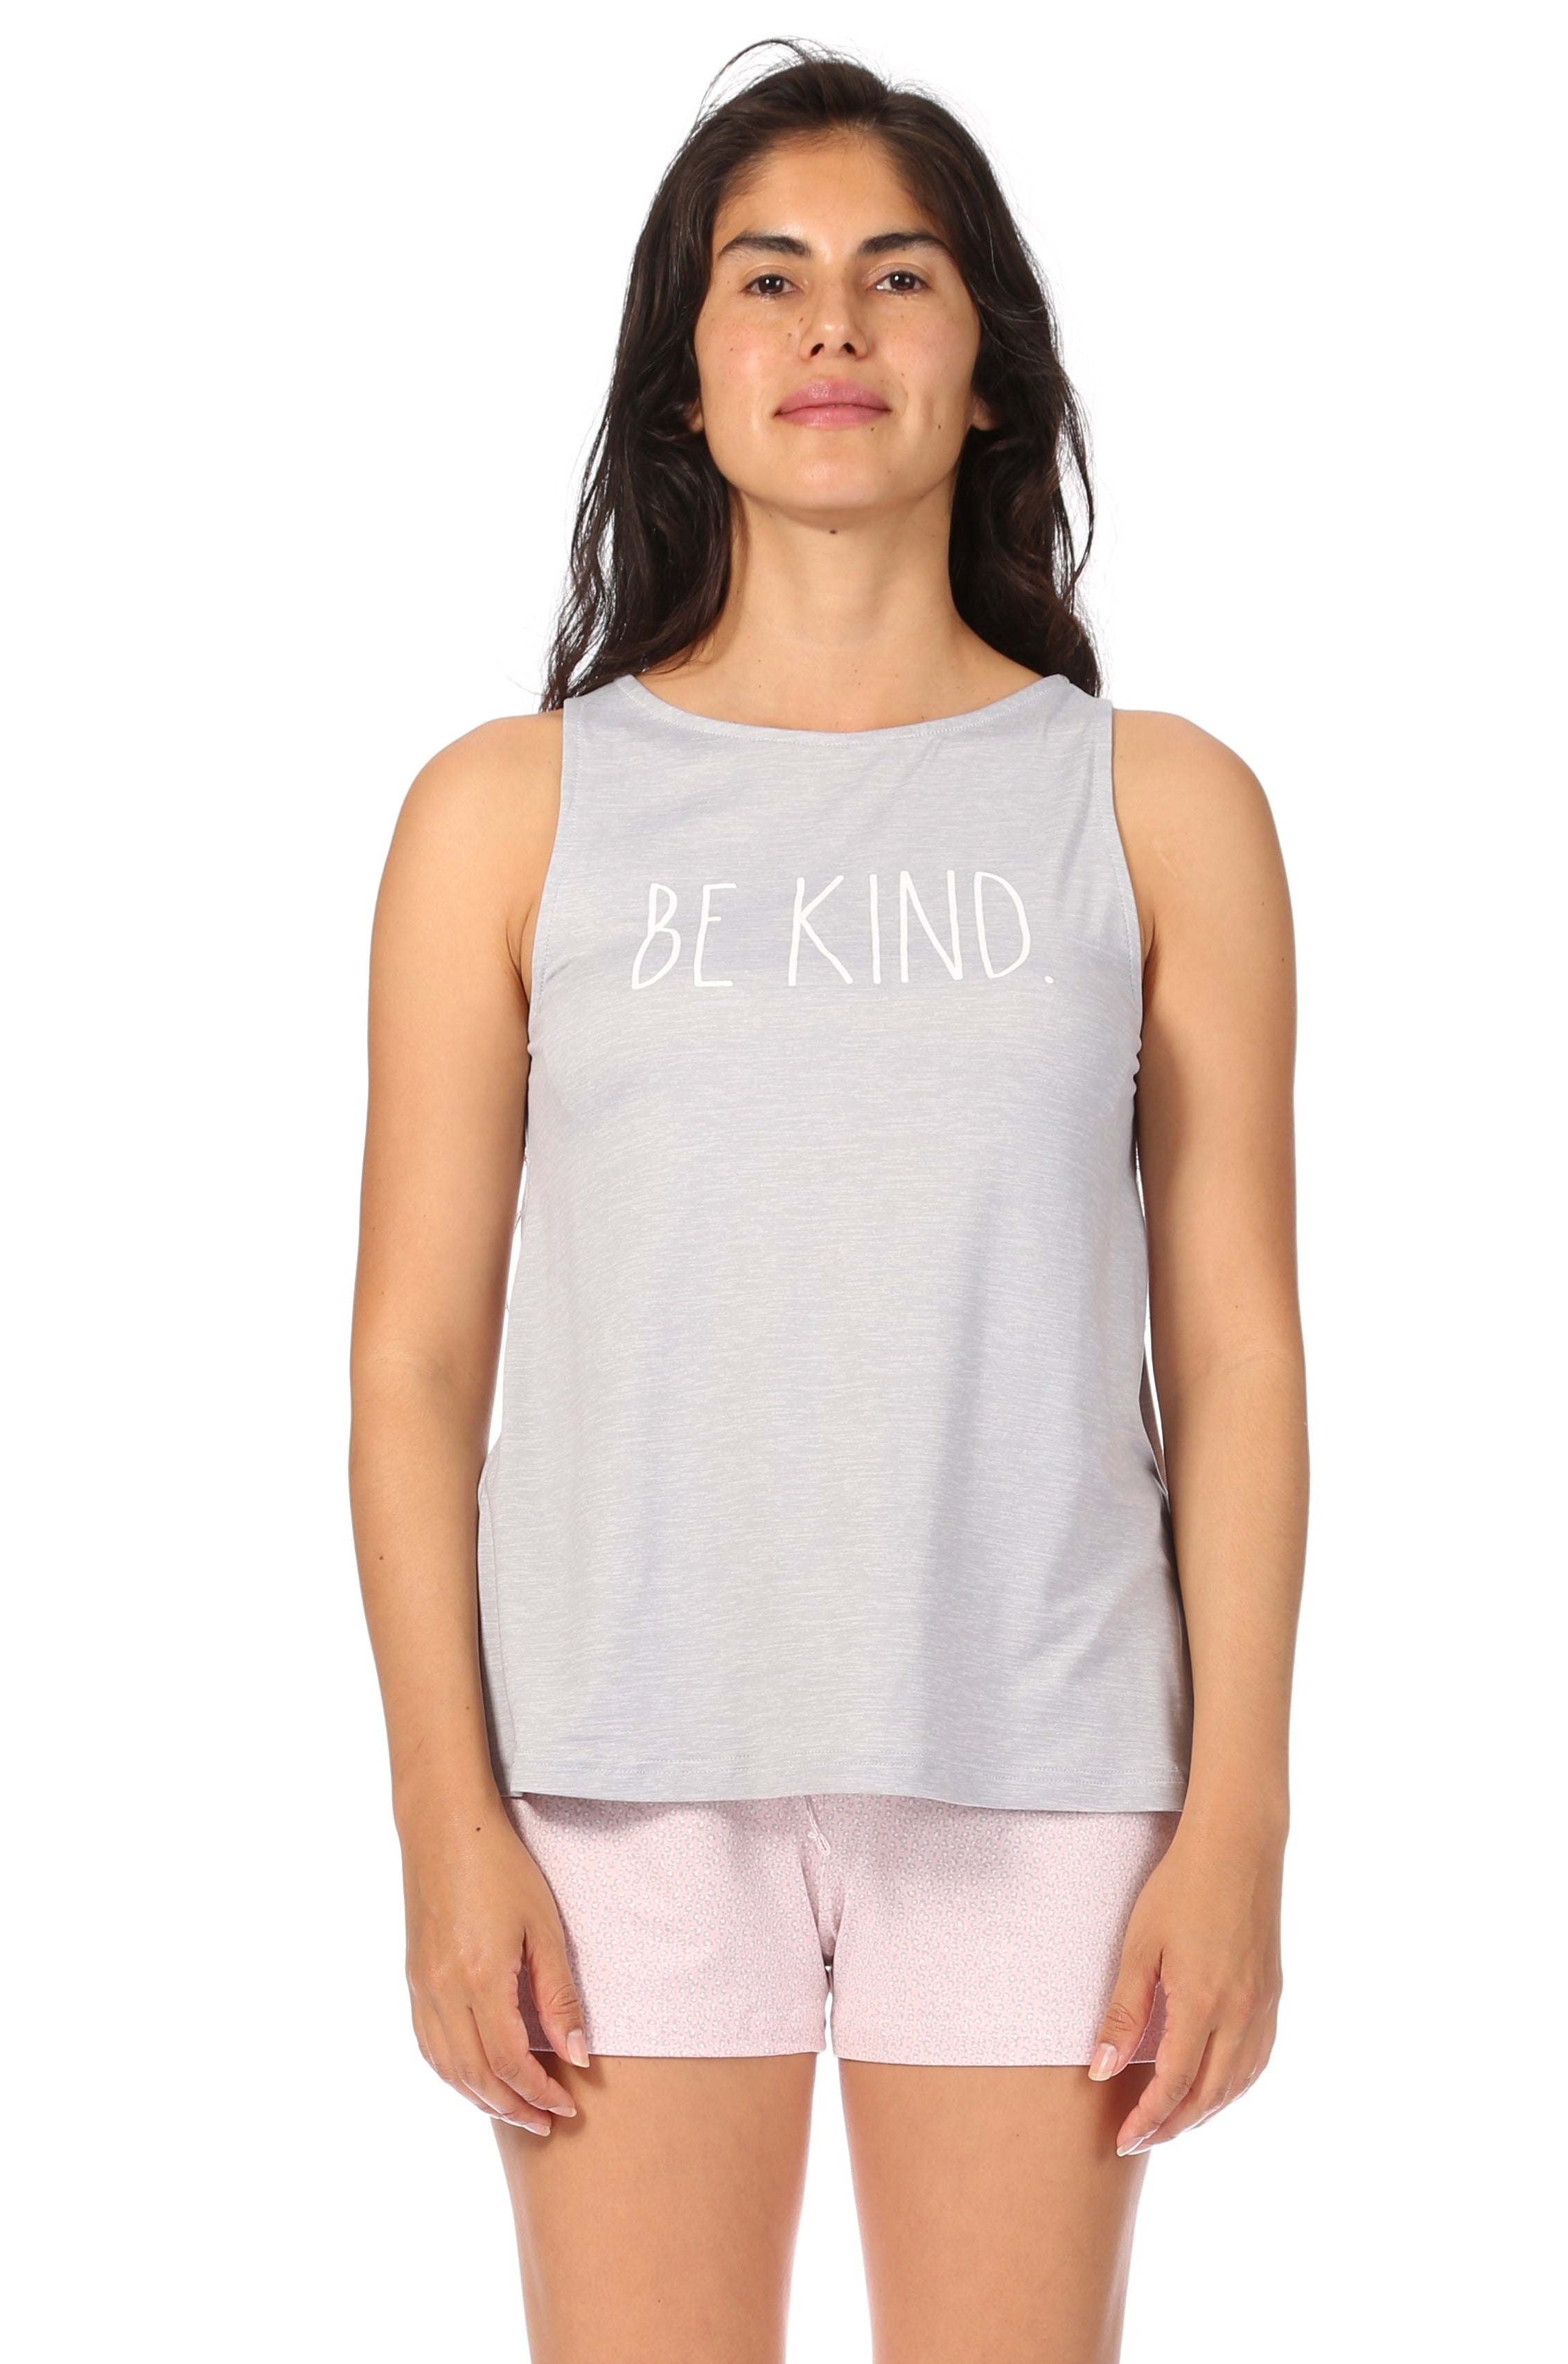 Women's "BE KIND" Tank and Short Pajama Set - Rae Dunn Wear